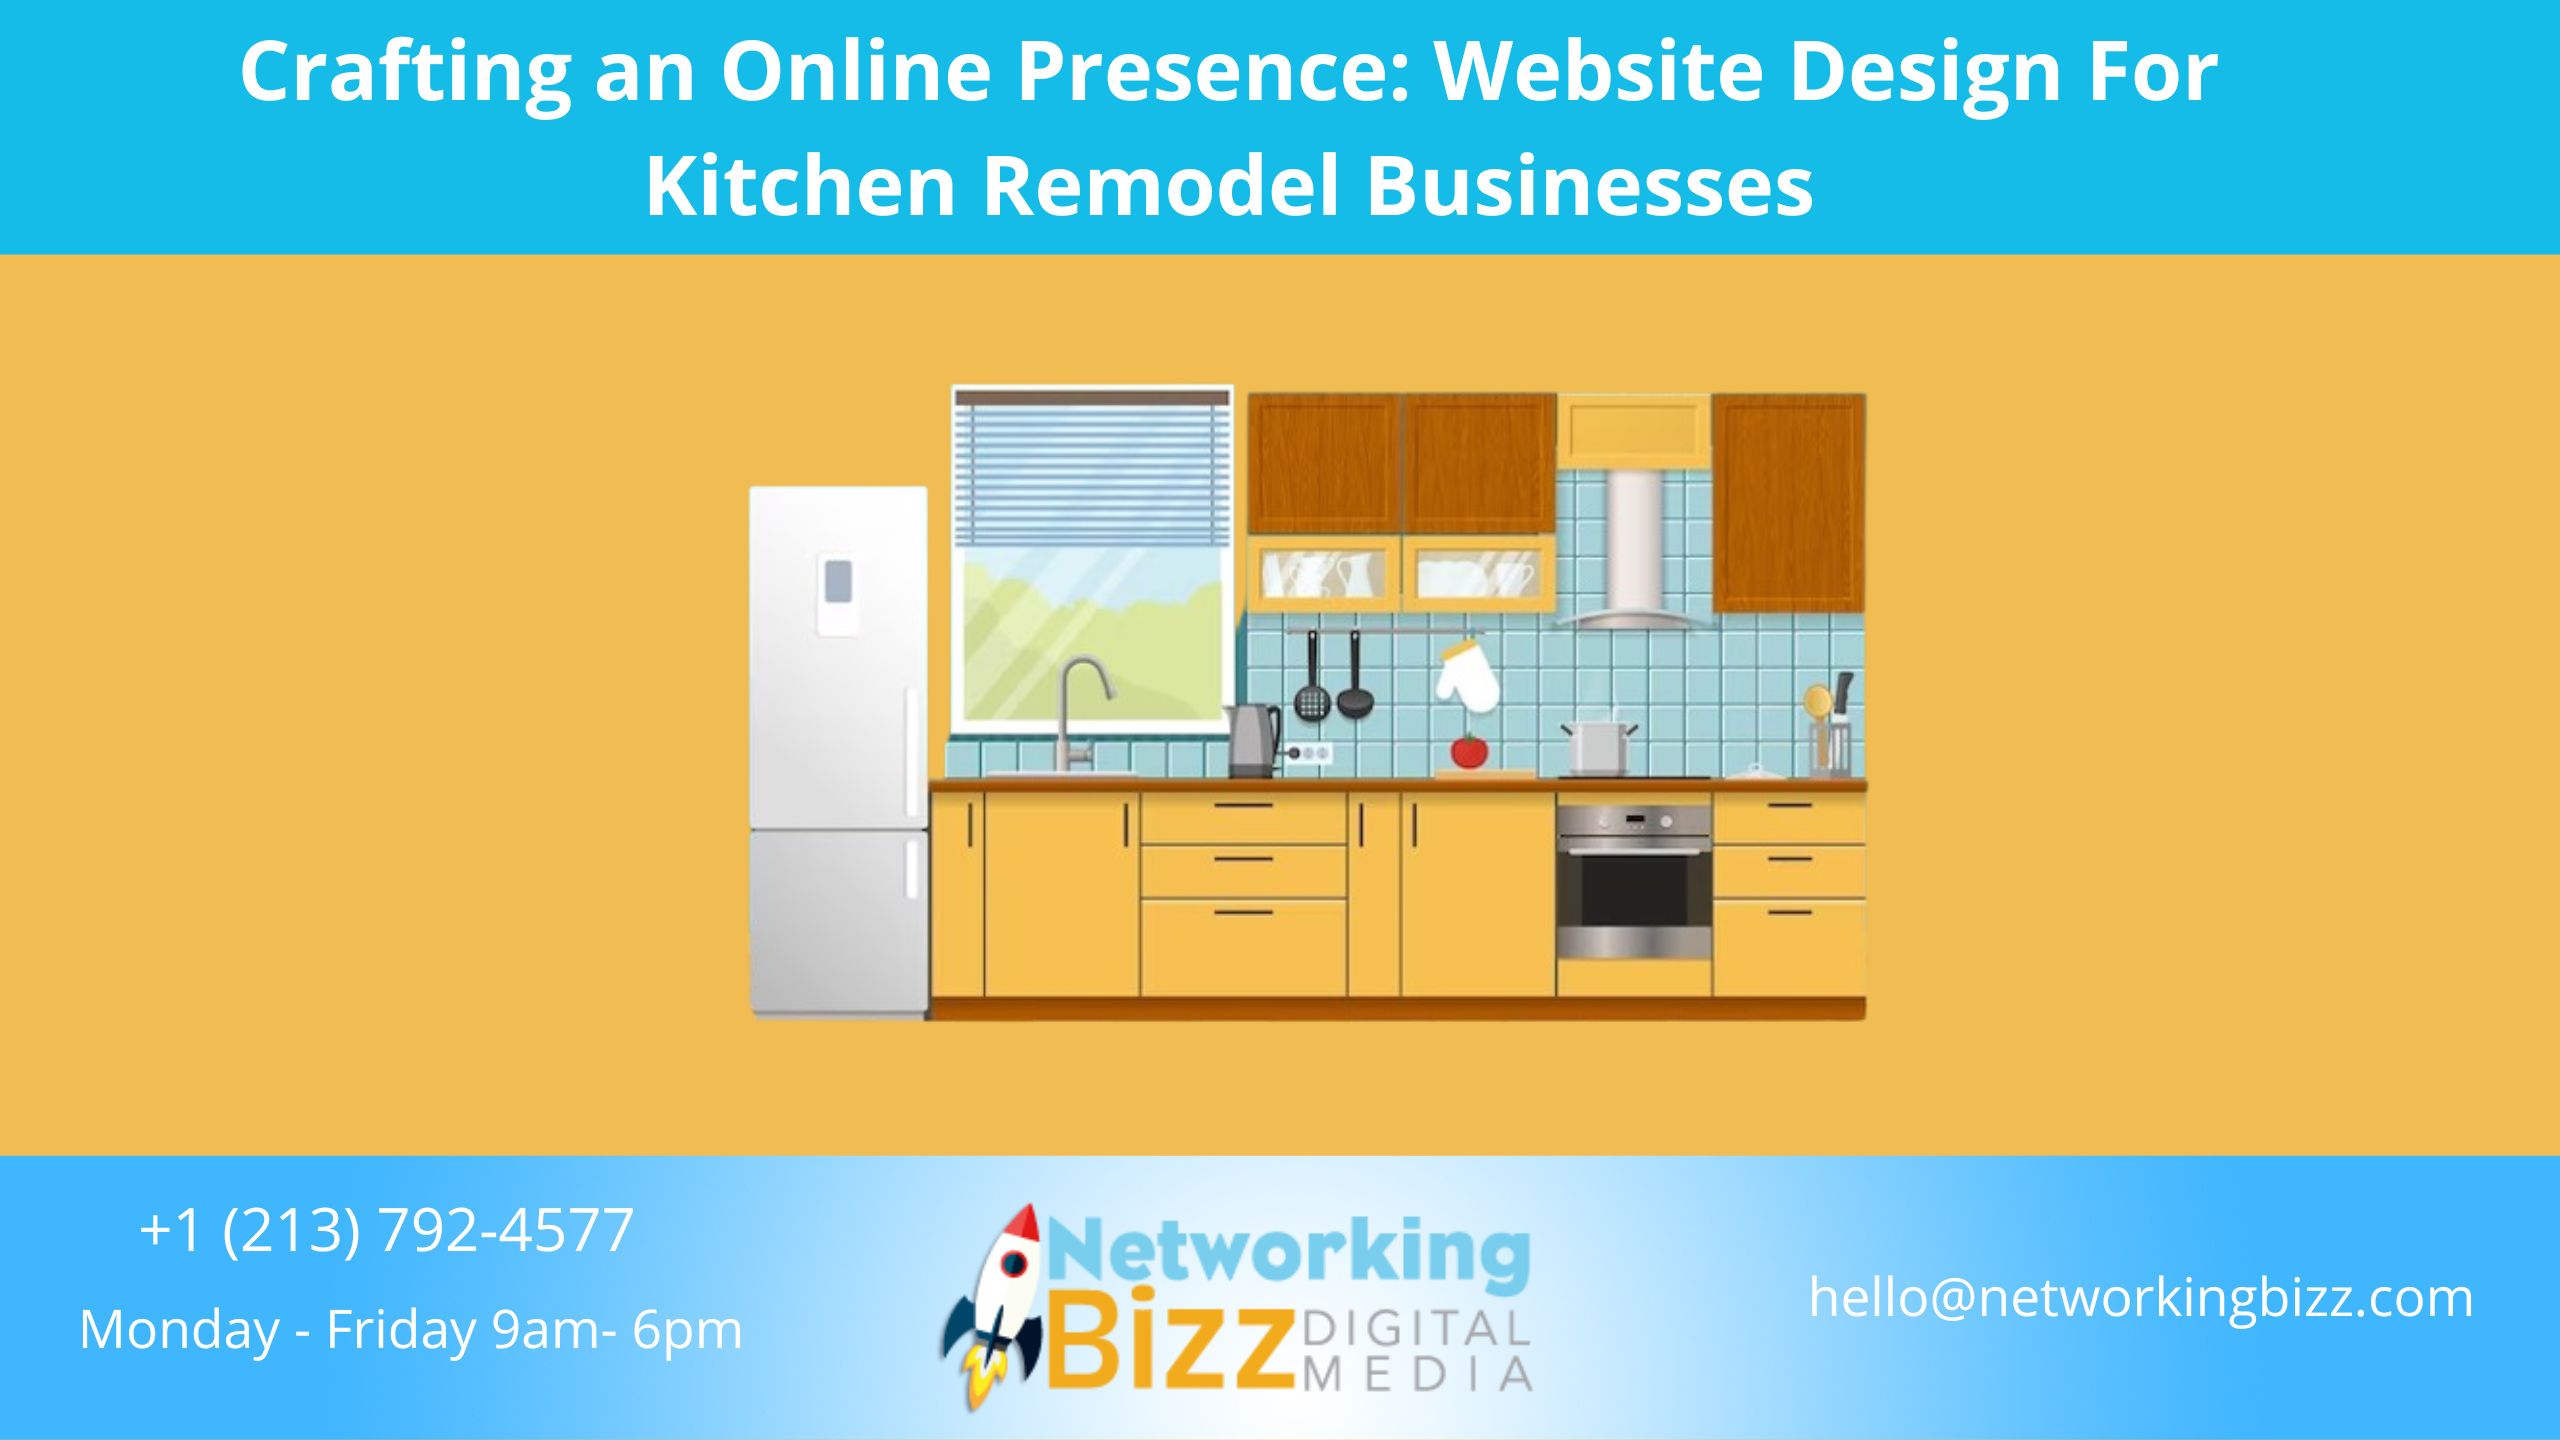 Crafting an Online Presence: Website Design For Kitchen Remodel Businesses